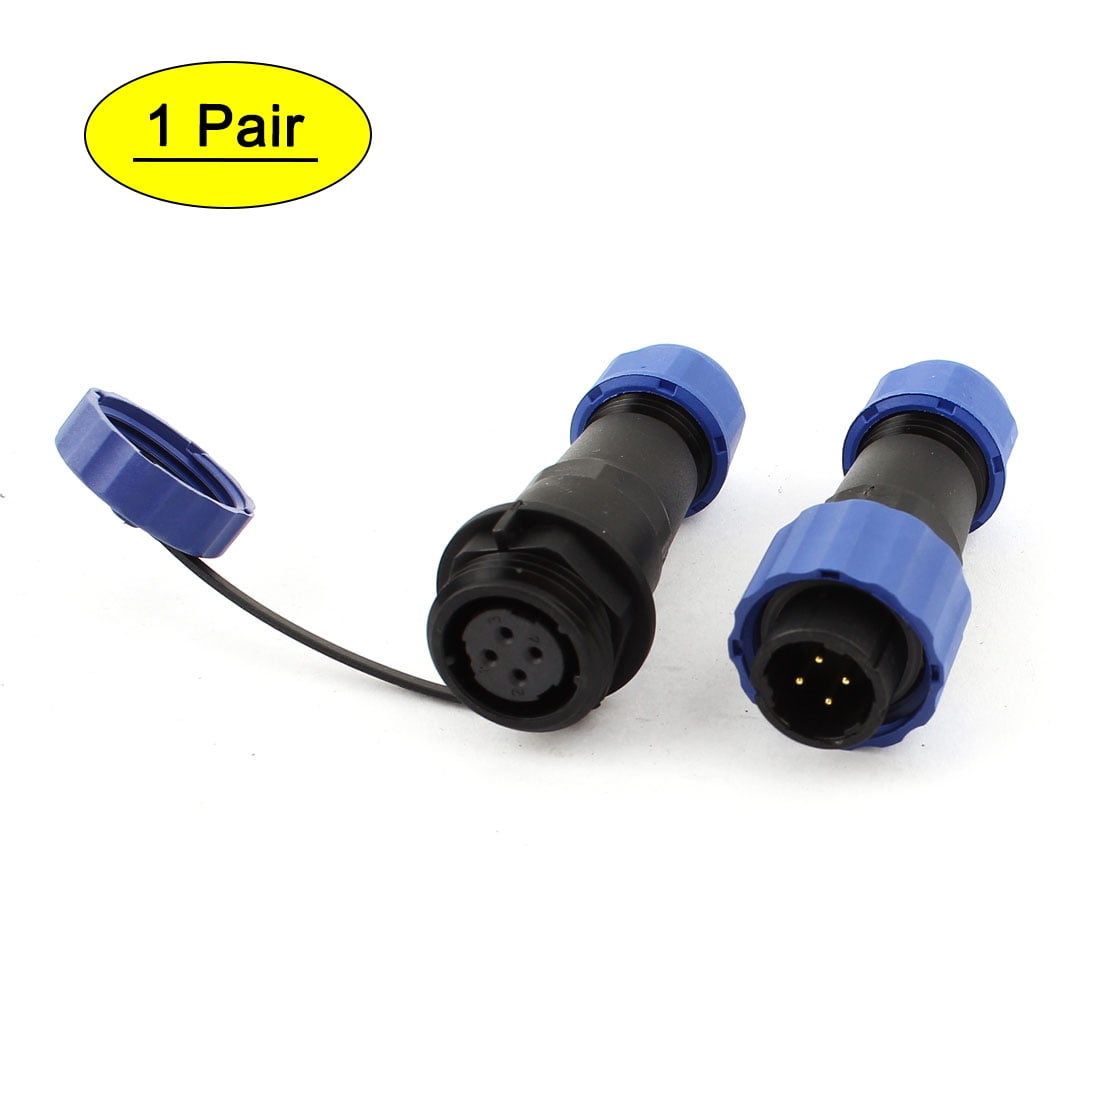 1 Pair 13MM Waterproof Aviation Cable Connector Plug And Socket 2PIN 4PIN 7PIN 